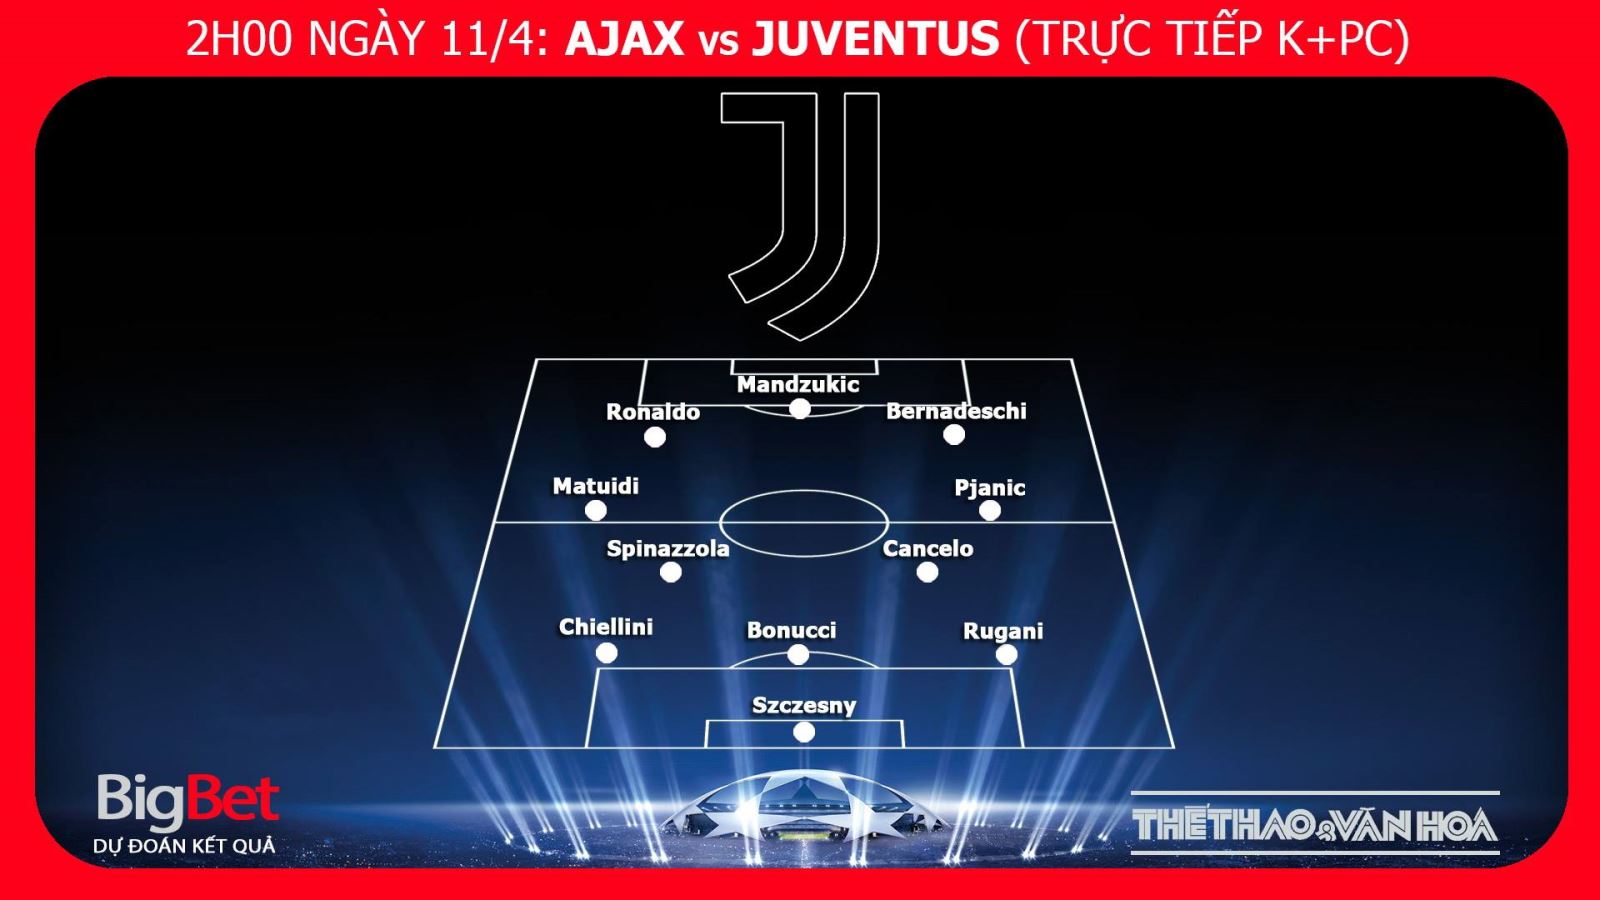 Ajax vs Juventus, Juve vs Ajax, soi keo Ajax vs Juventus, Ajax, Juventus, Juve, truc tiep bong da, keo bong da, lich thi dau c1, tu ket cup c1, c1, xem bong da truc tuyen